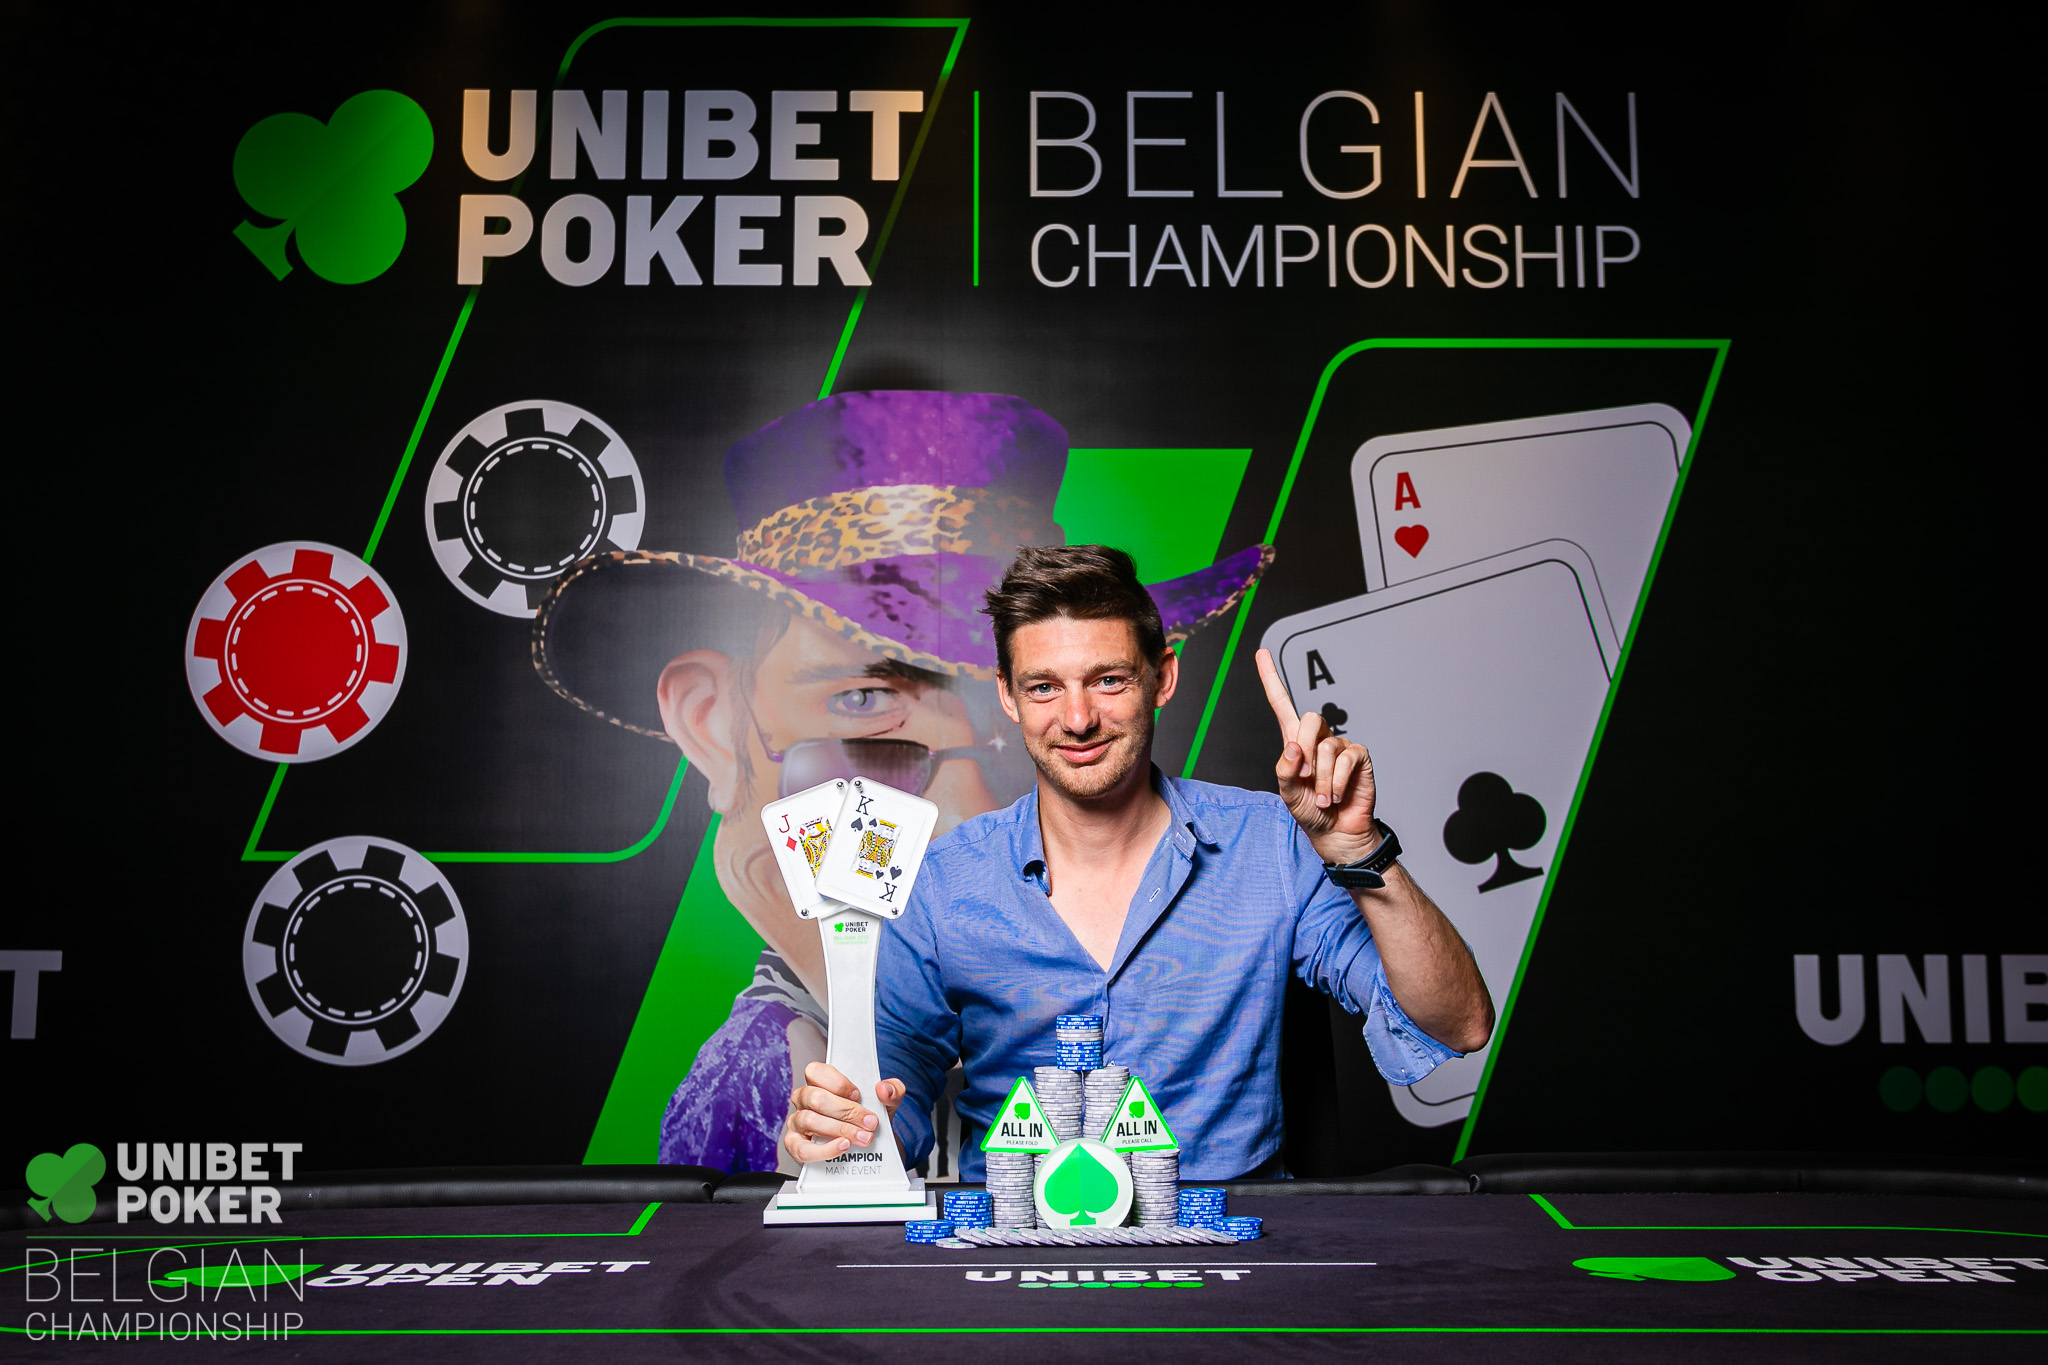 Unibet Poker Belgian Championship 2019 Winner